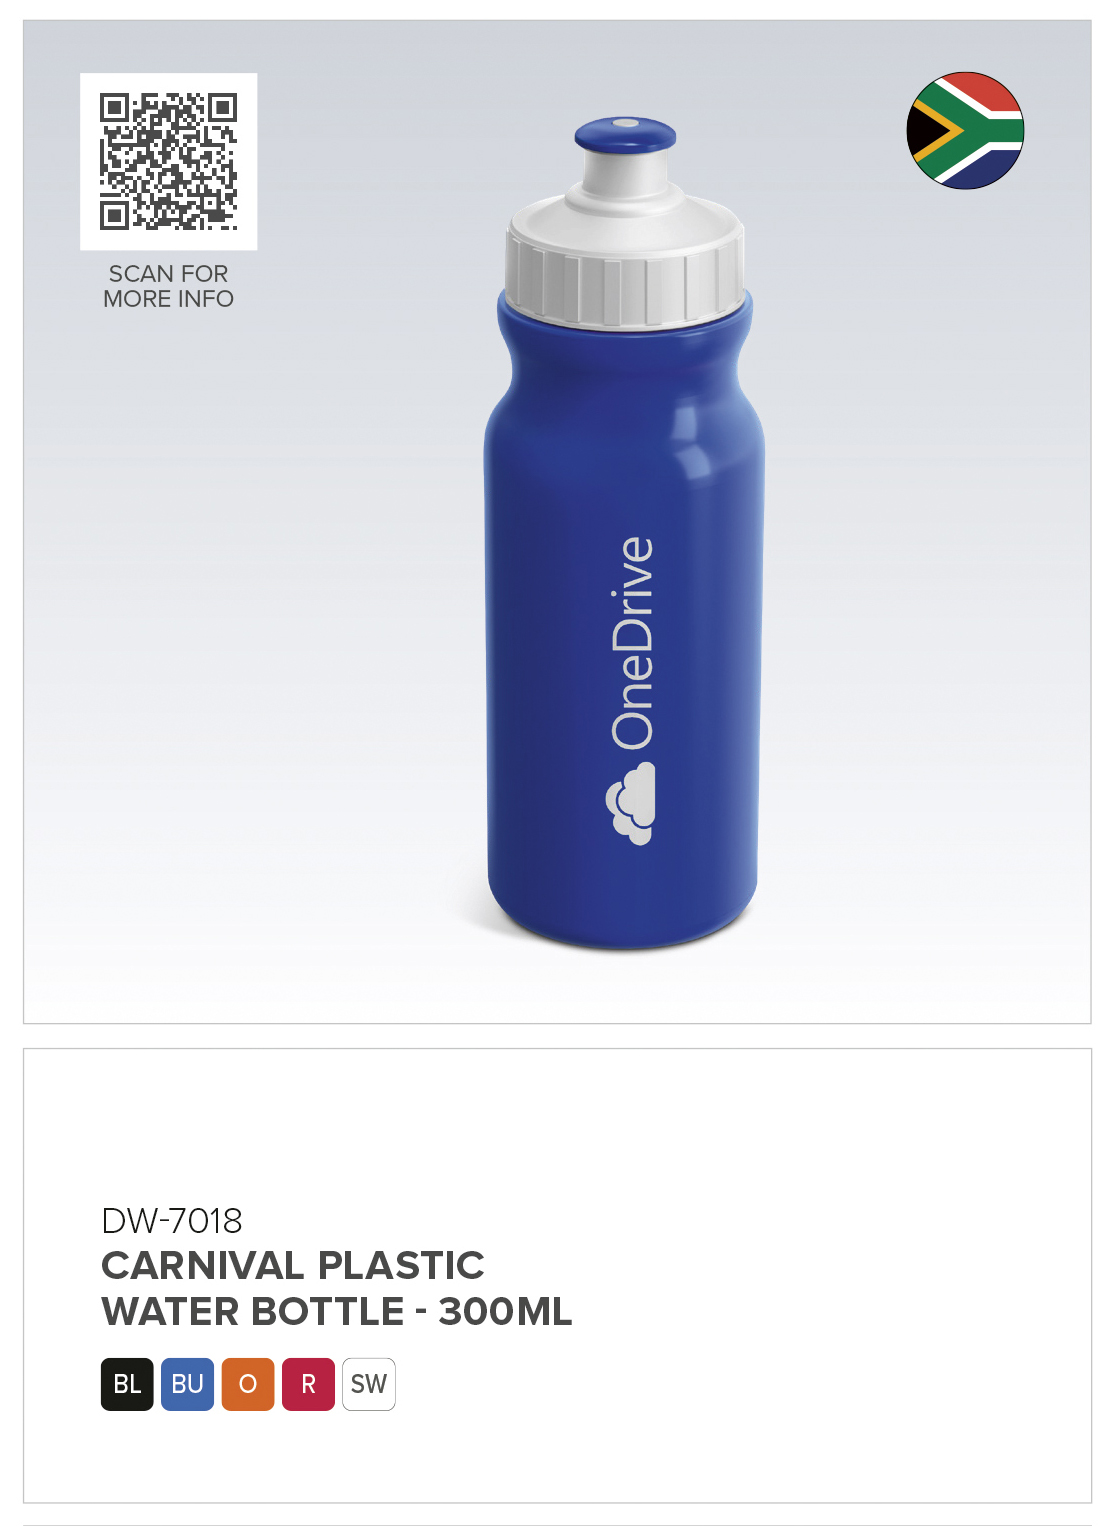 DW-7018 - Carnival Plastic Water Bottle - 300ml - Catalogue Image